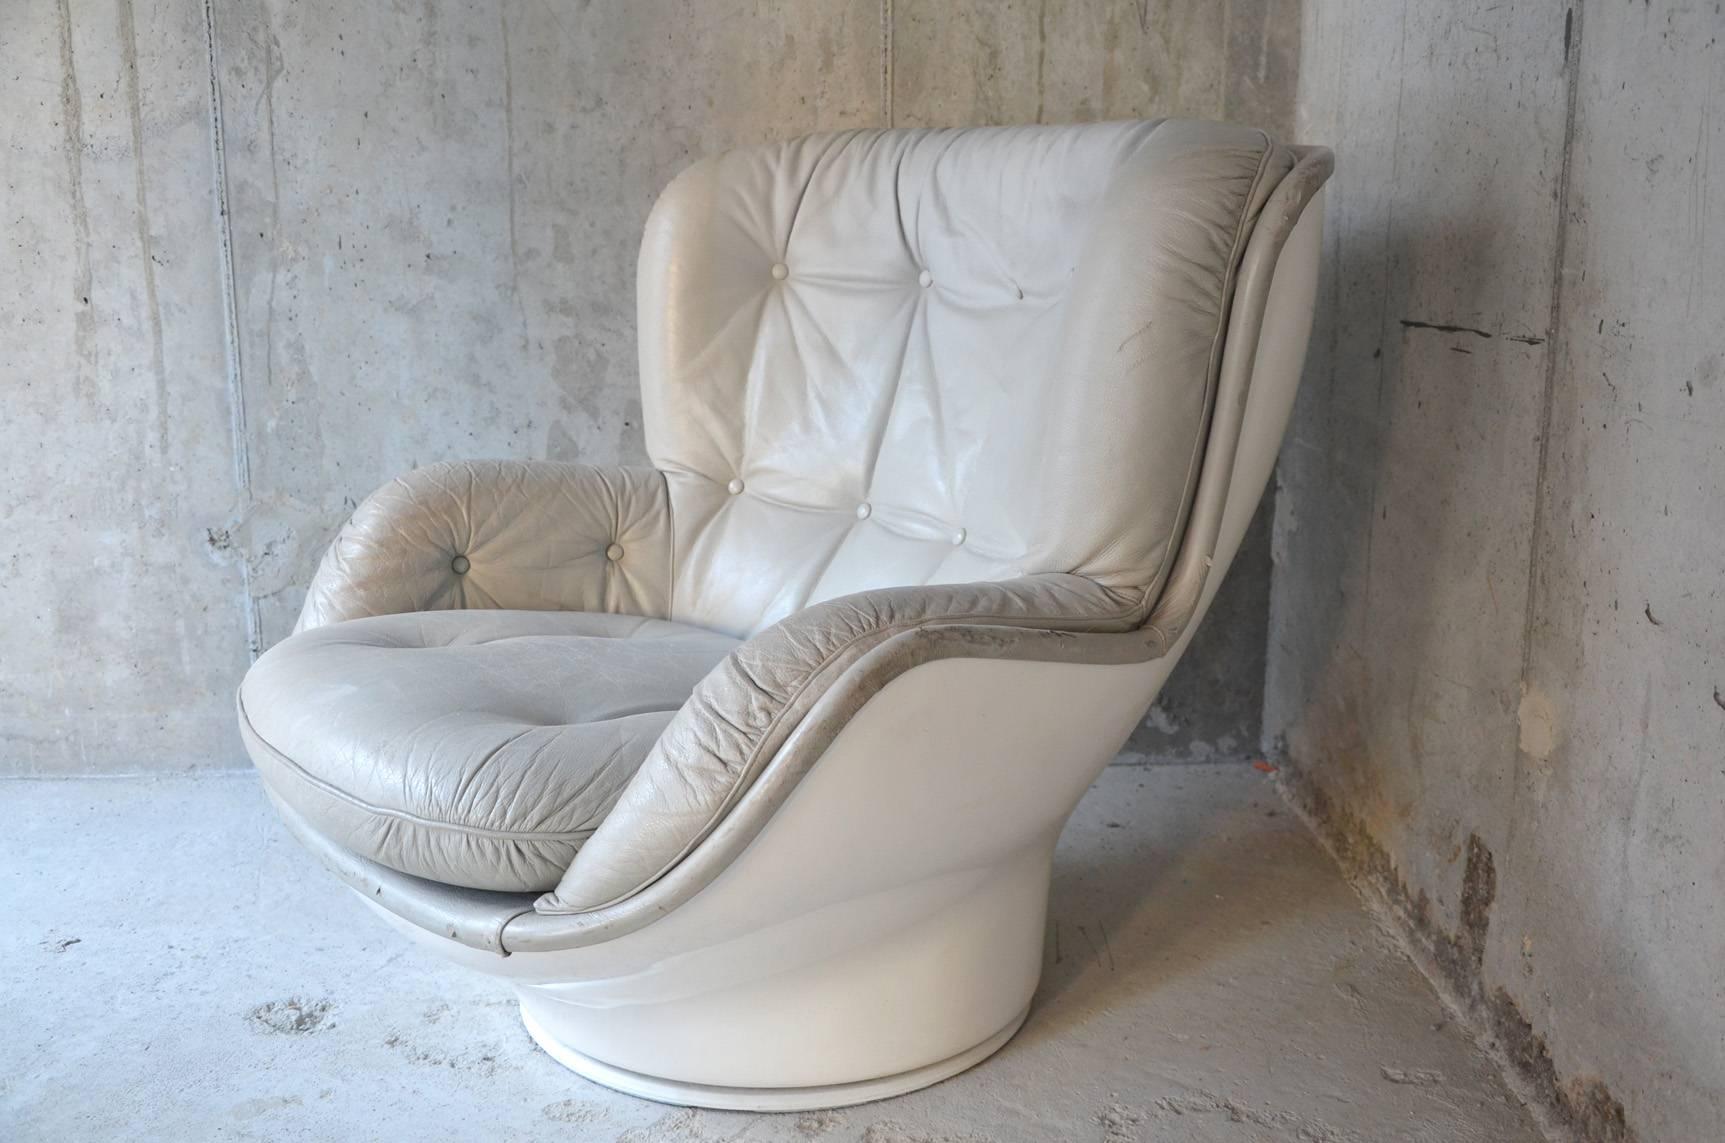 Original 1960s Michel Cadestin yoga chair and ottoman.
Airborn edition.
Original grey leather.